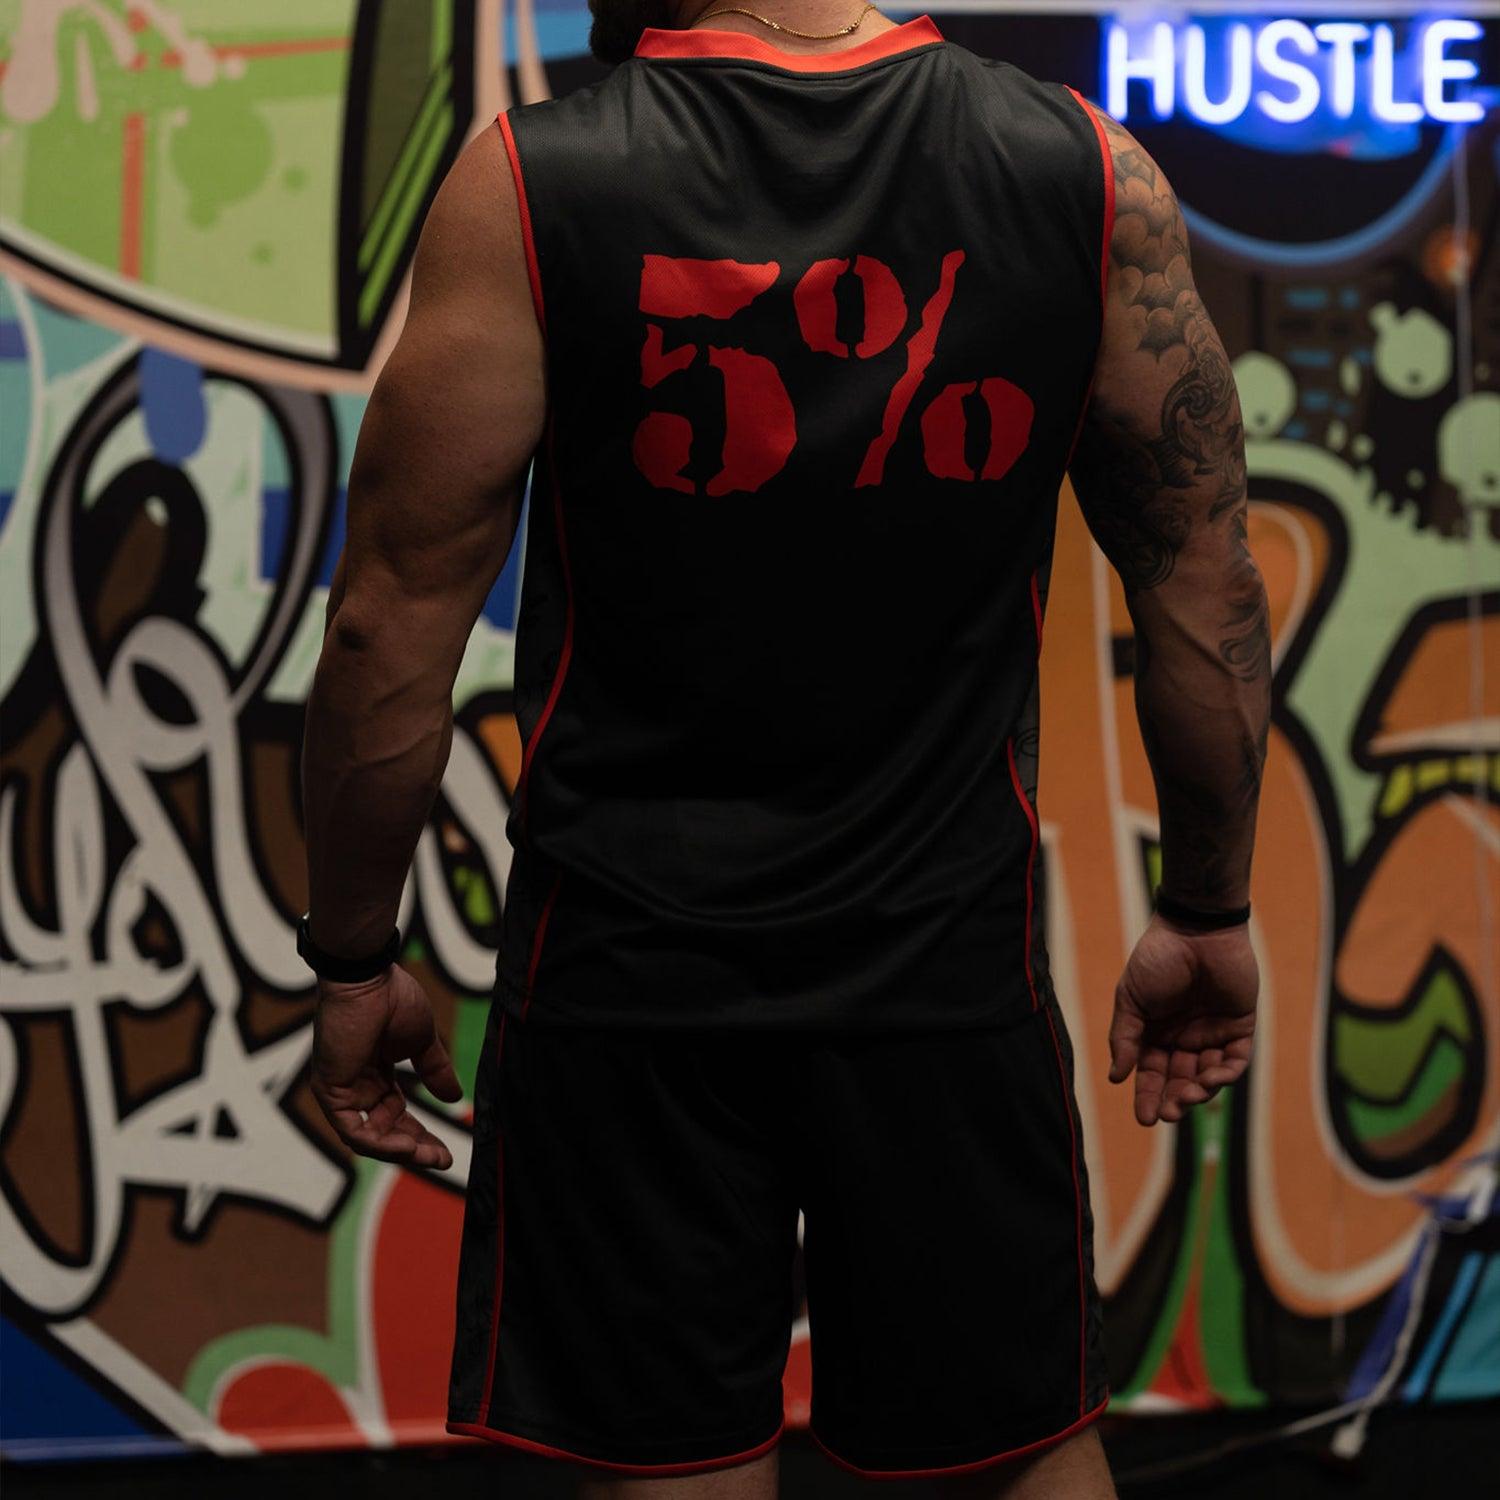 Love It Kill It, Black & Red Basketball Jersey - 5% Nutrition